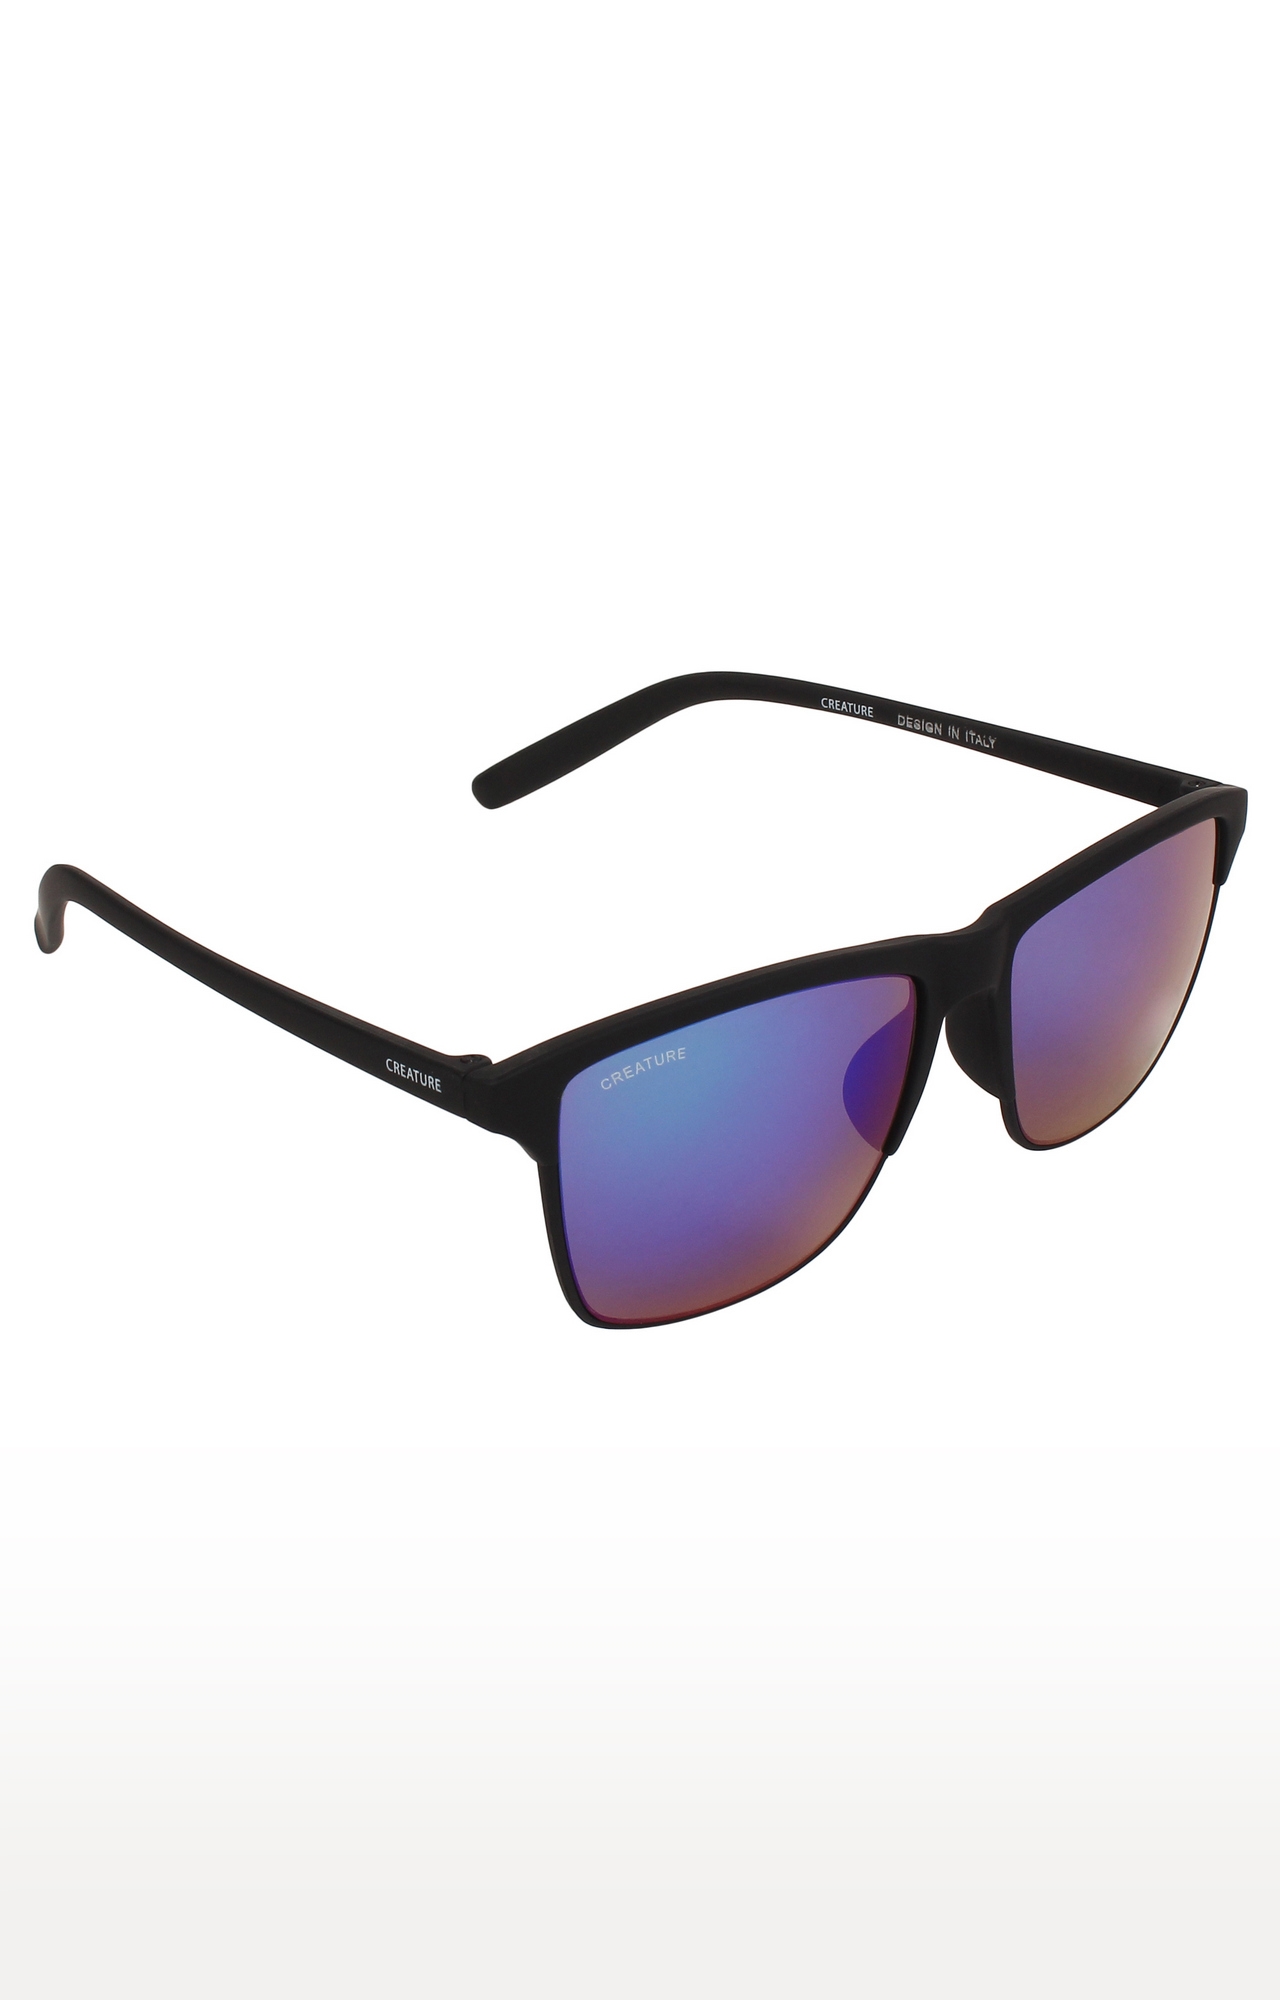 CREATURE | CREATURE Black Wayfarer Sunglasses with UV Protection (Lens-Multicolored|Frame-Black)